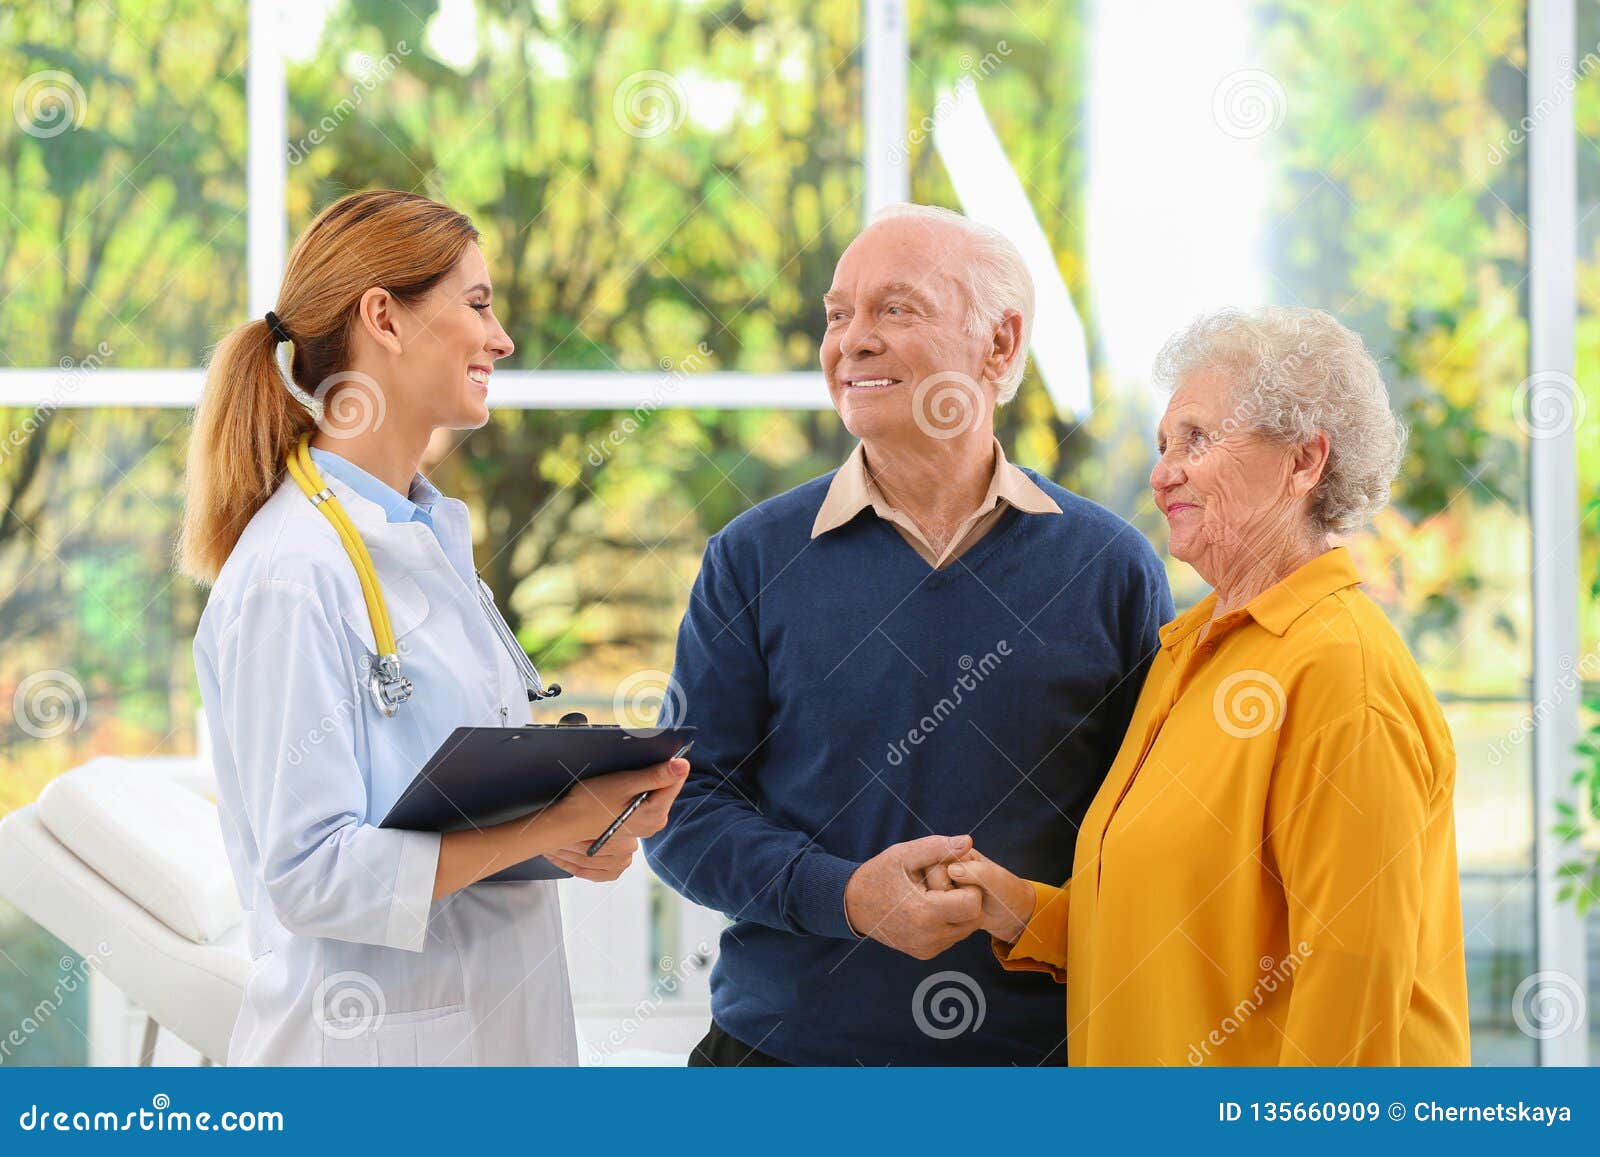 doctor working with elderly patients